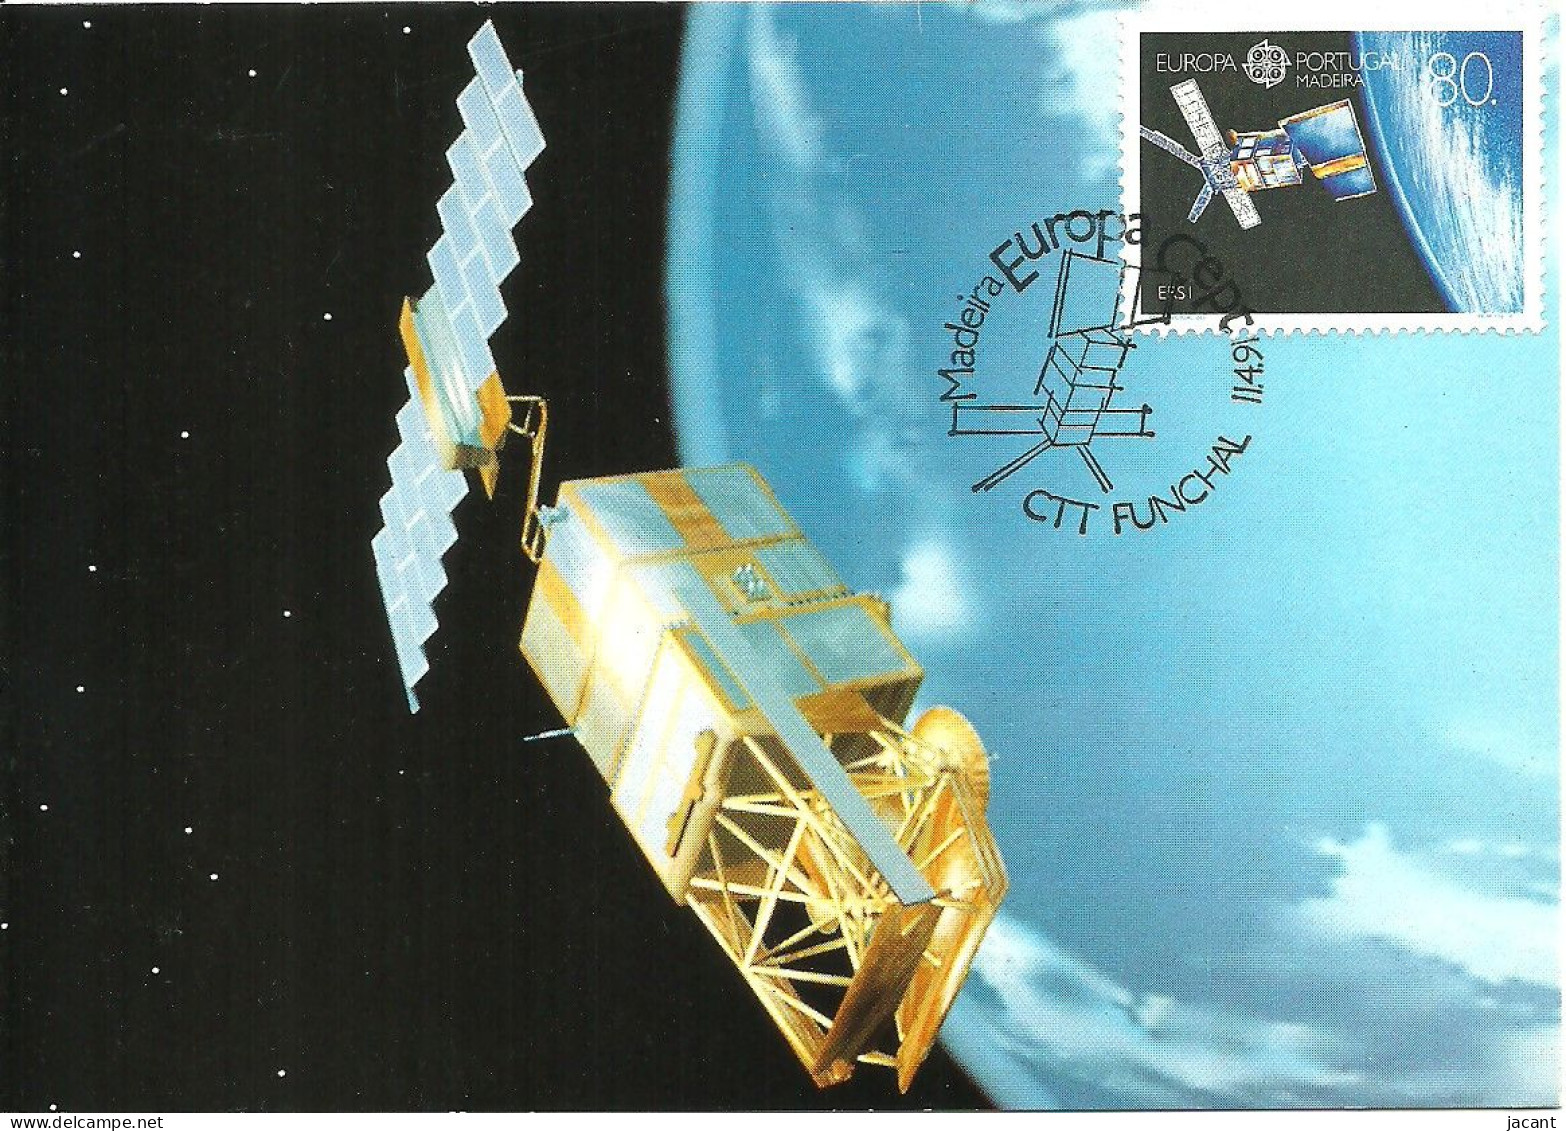 30835 - Carte Maximum - Portugal Madeira - Europa - Satetite ERS-1 Satellite - Maximumkarten (MC)